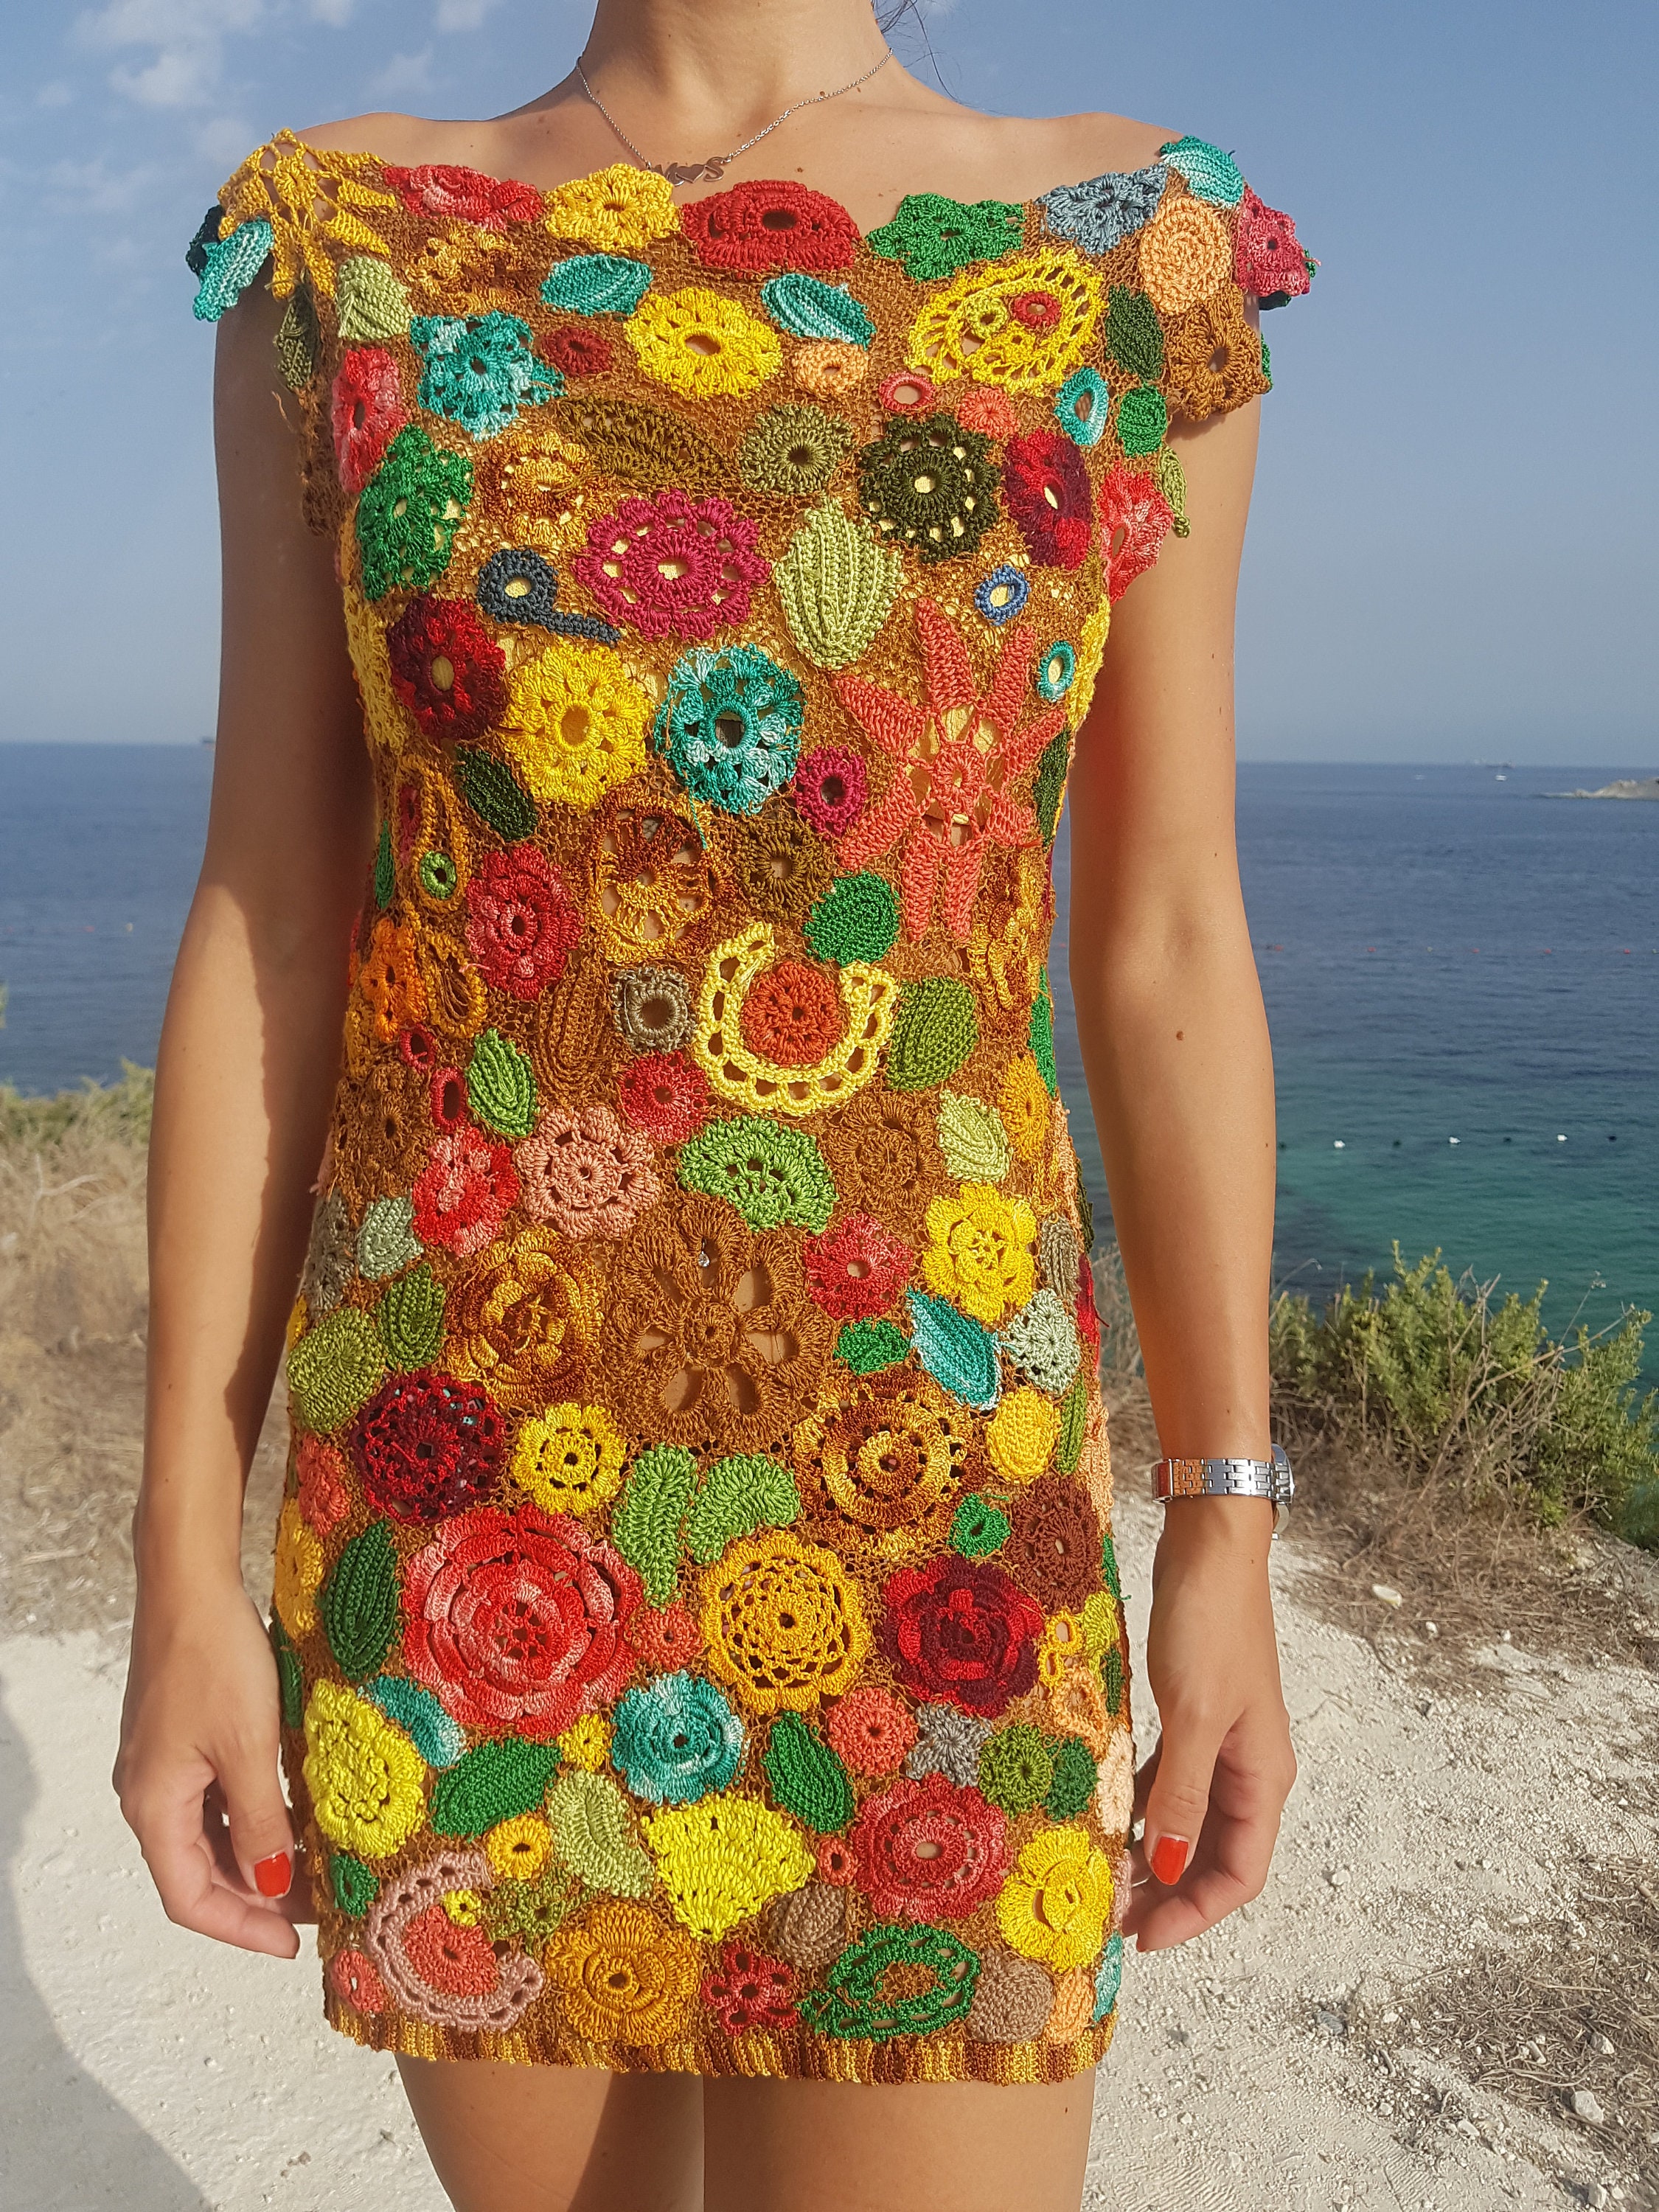 Unique Woman Knitt Dress Crochet Flower Dress Summer Colorit - Etsy